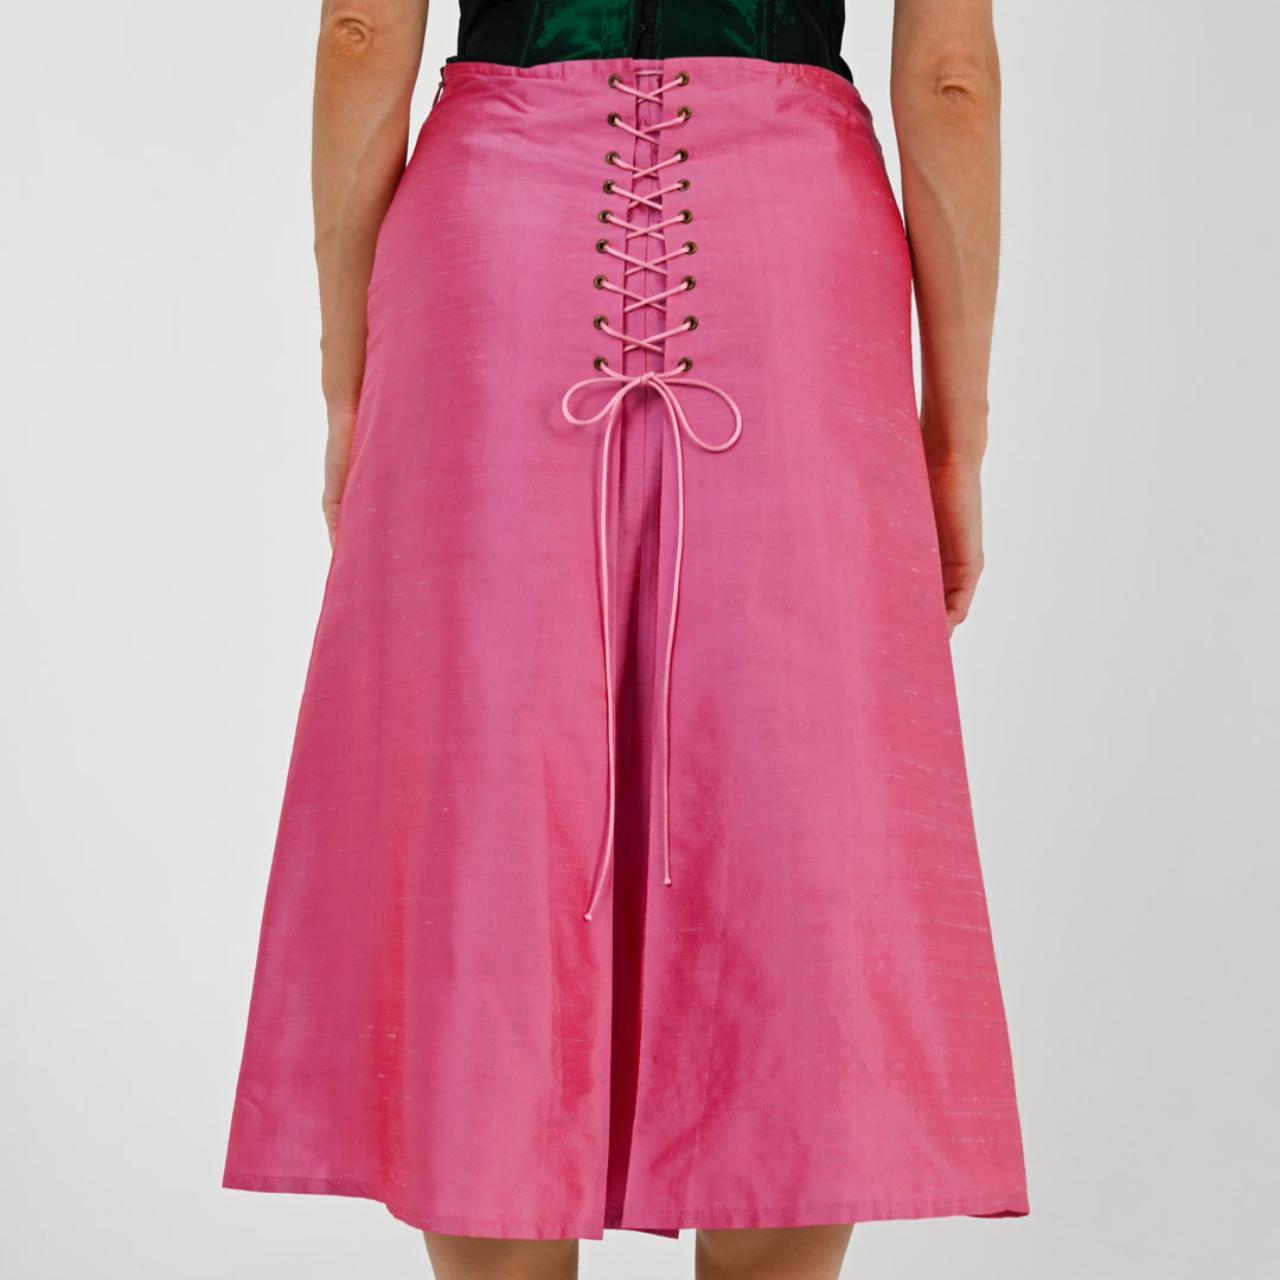 Tara Jarmon Peony Silk Laced Skirt Made in... - Depop